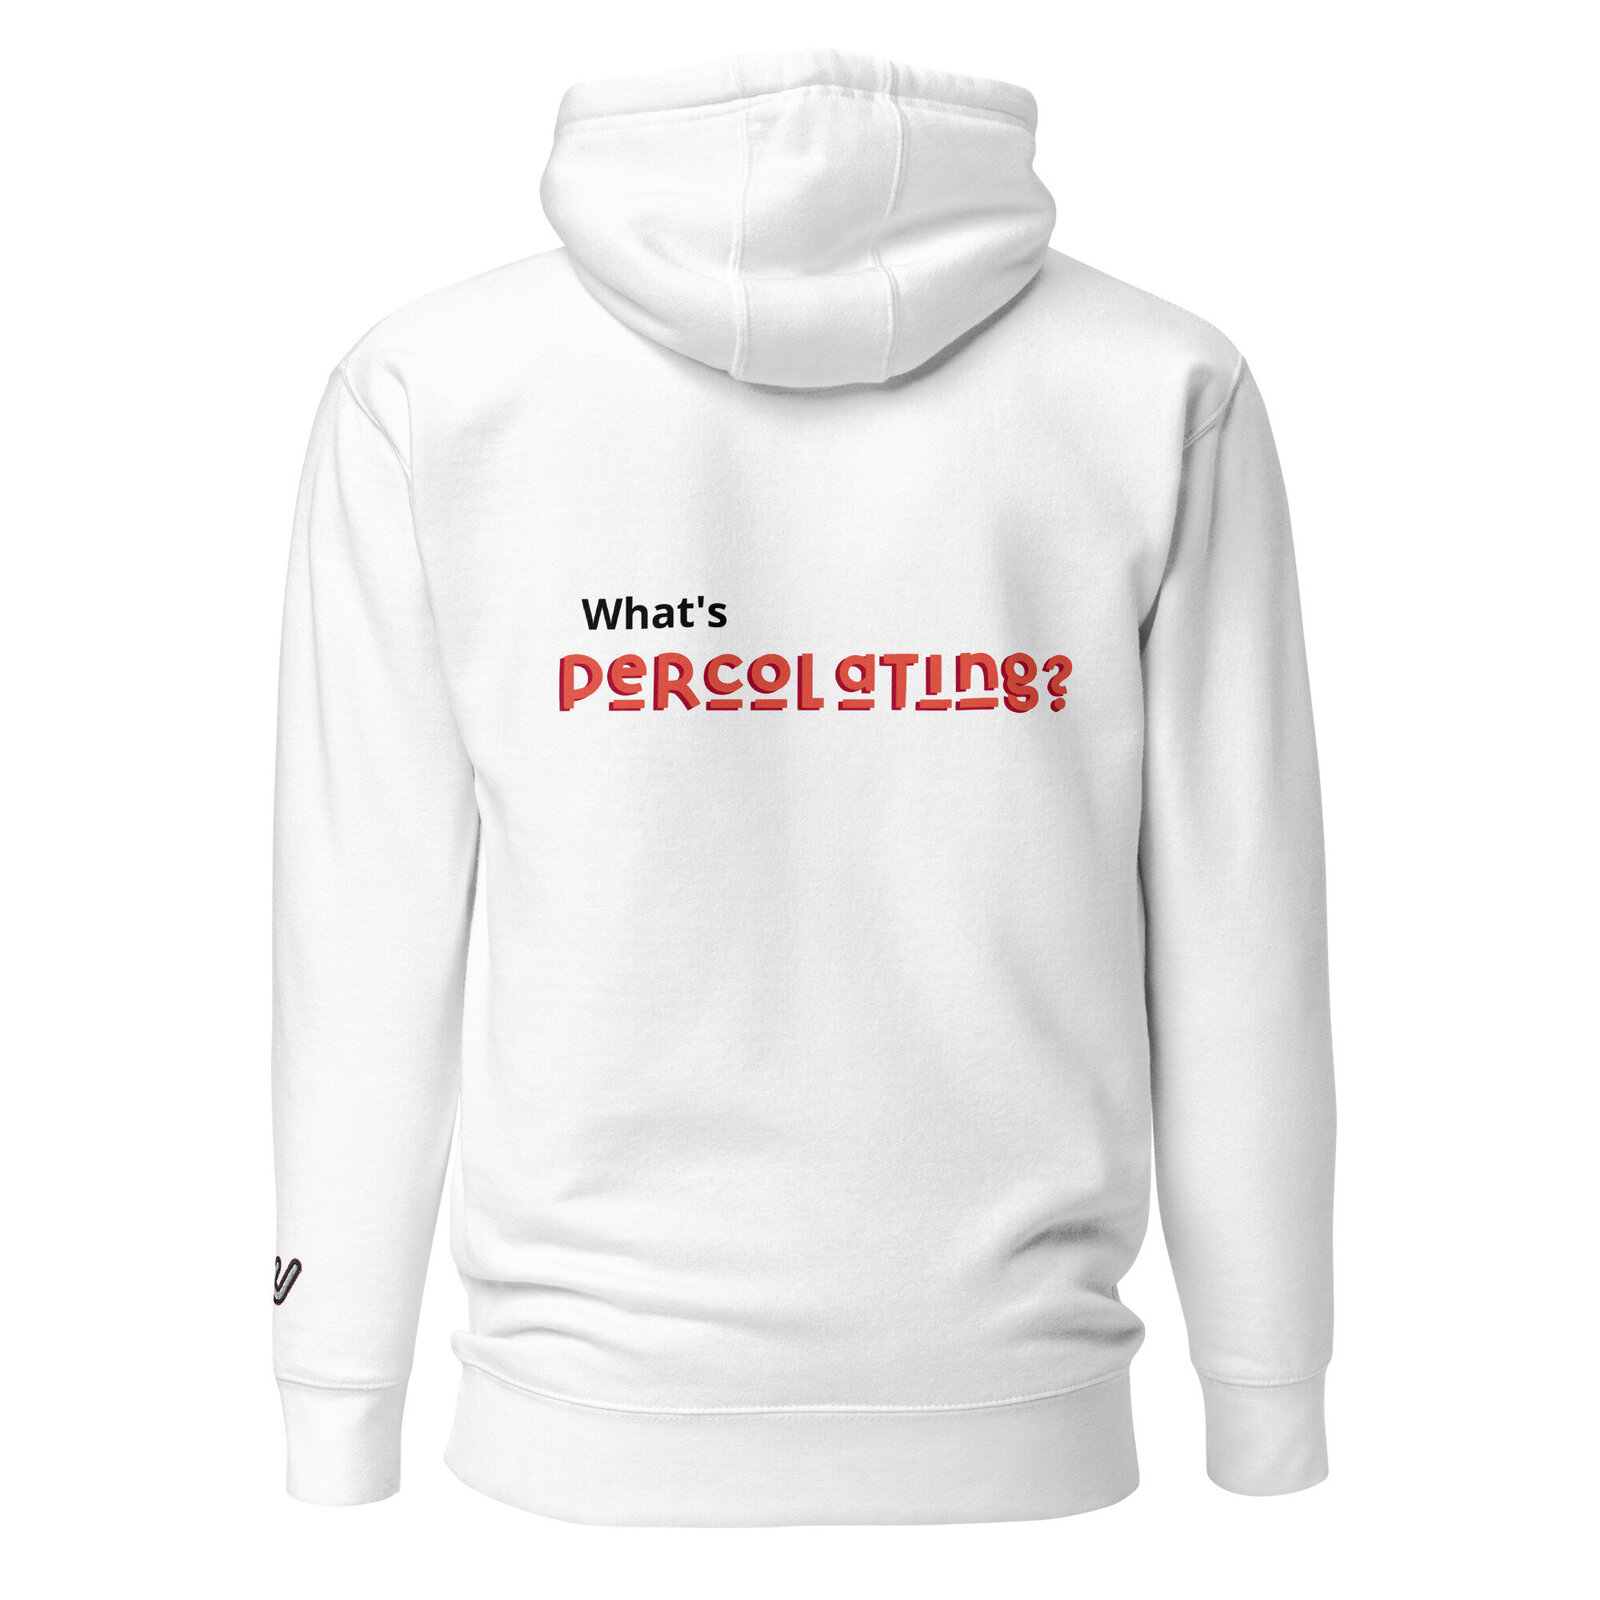 unisex-premium-hoodie-white-back-6513bbb032ef2